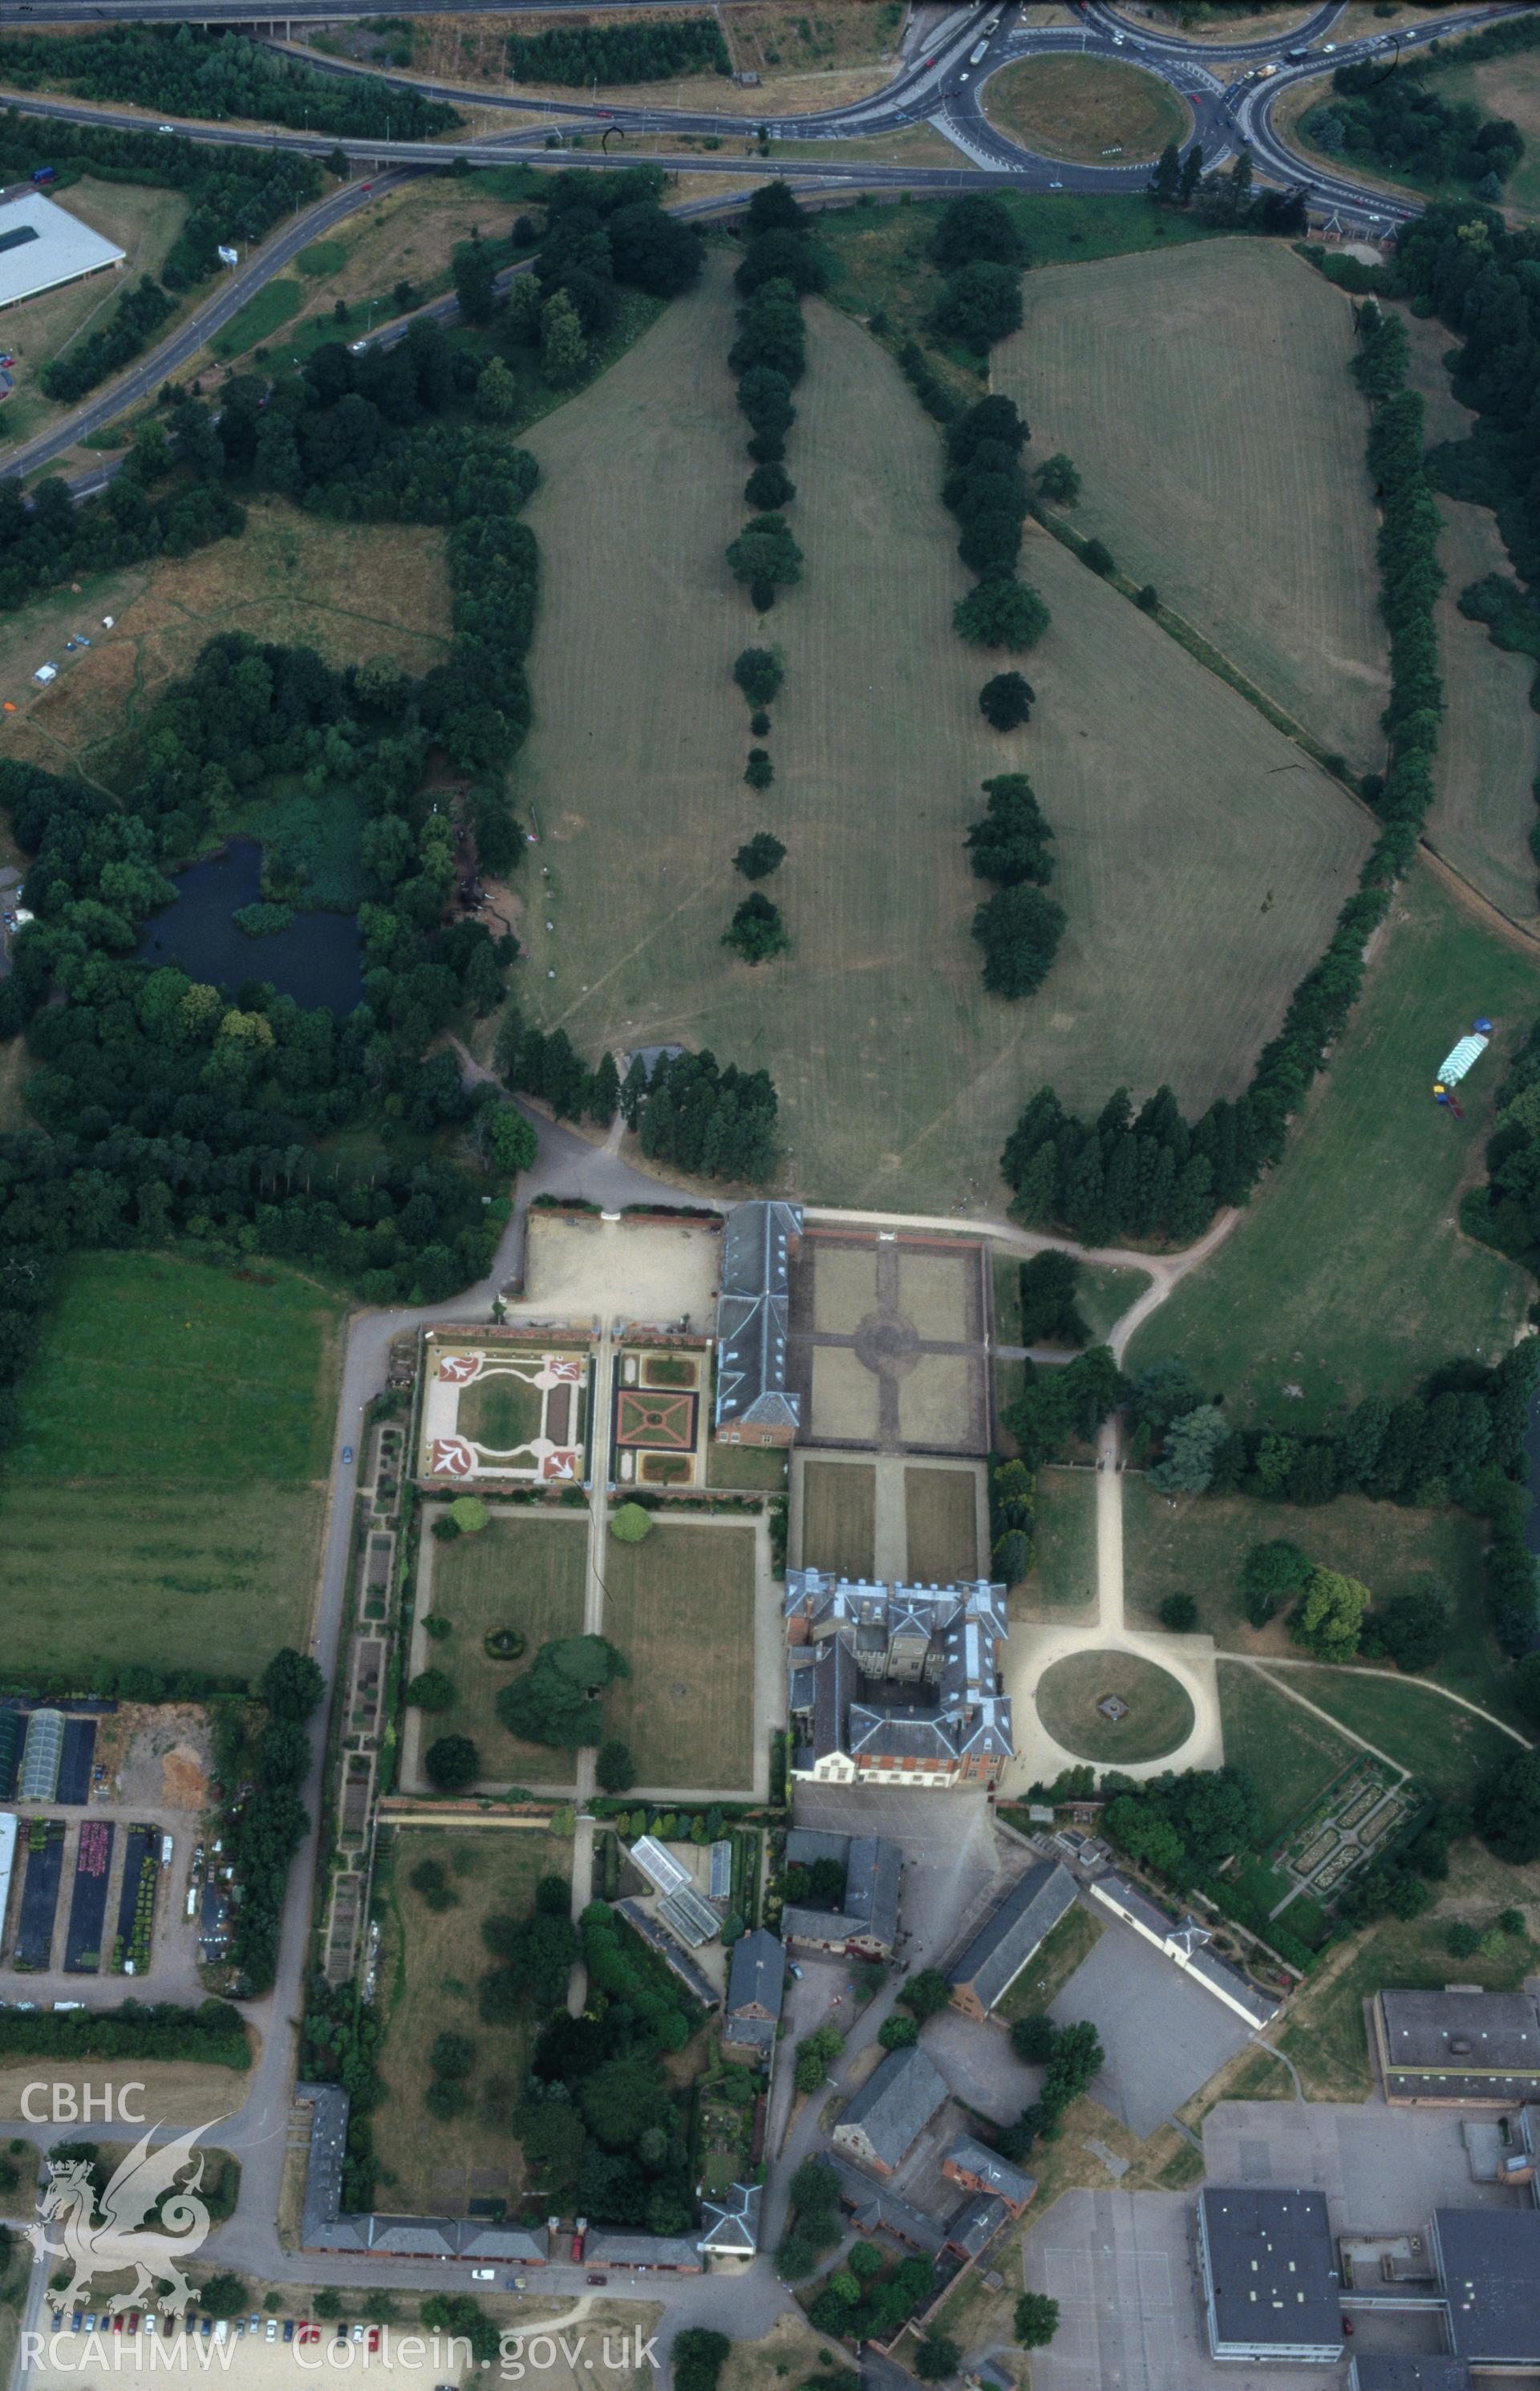 Slide of RCAHMW colour oblique aerial photograph of Tredegar Park, taken by C.R. Musson, 24/7/1996.